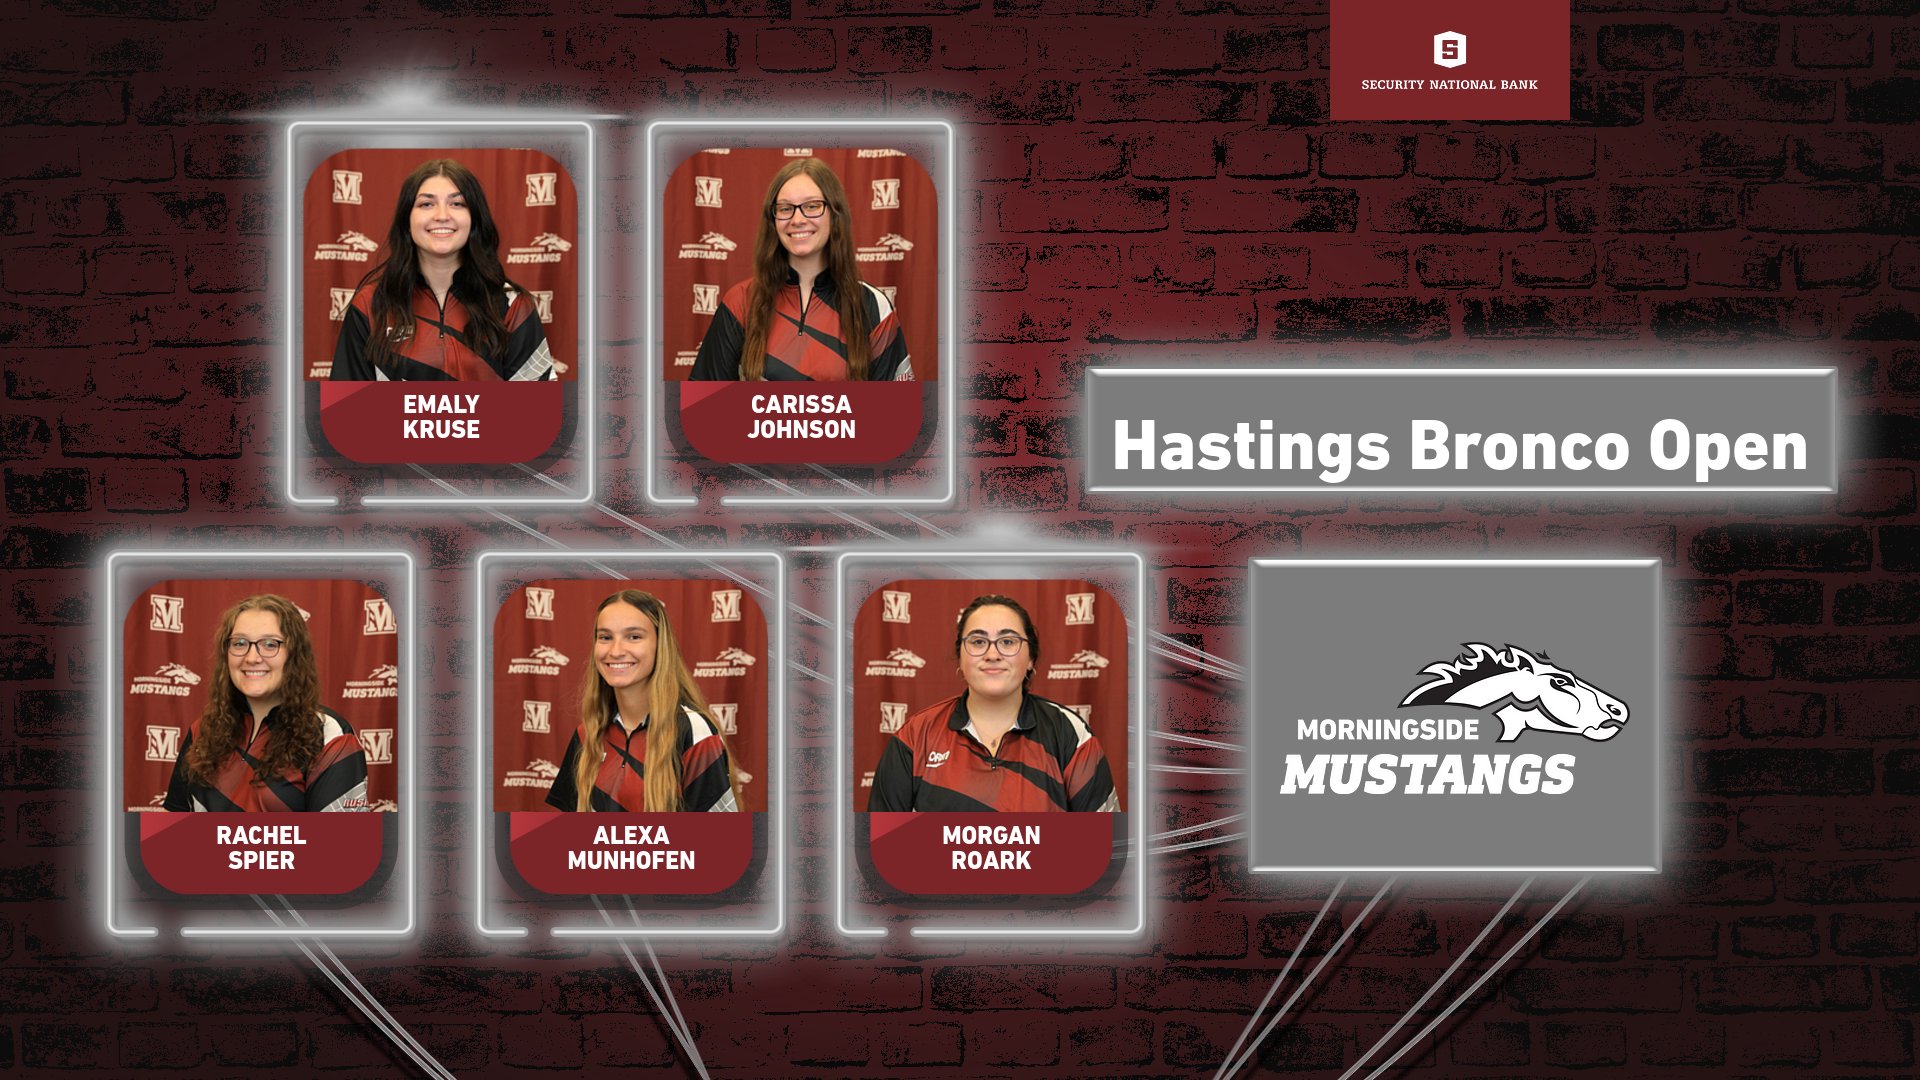 Mustangs take top spot at Hastings Bronco Open